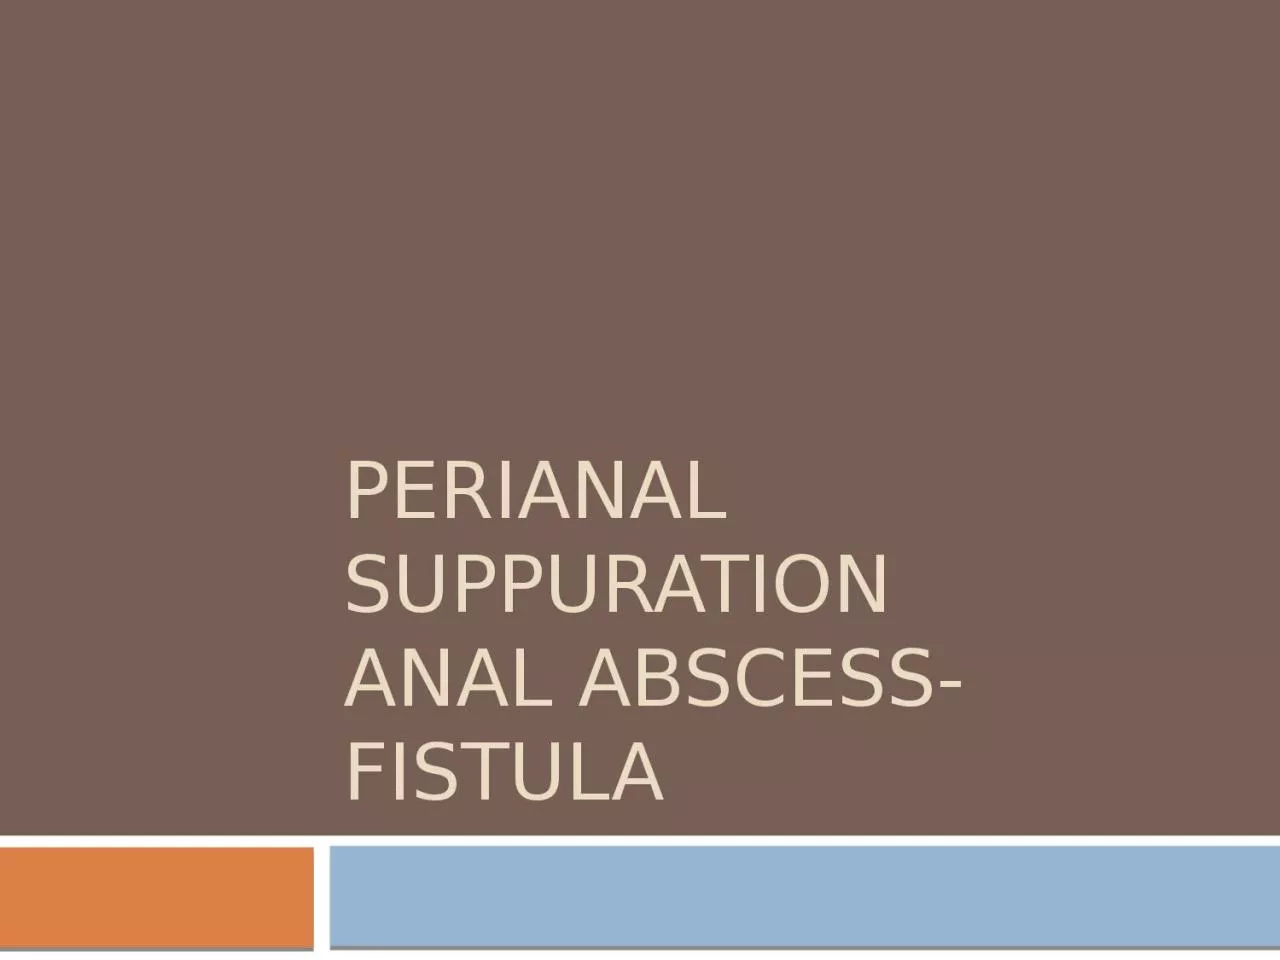 Perianal suppuration anal abscess-fistula